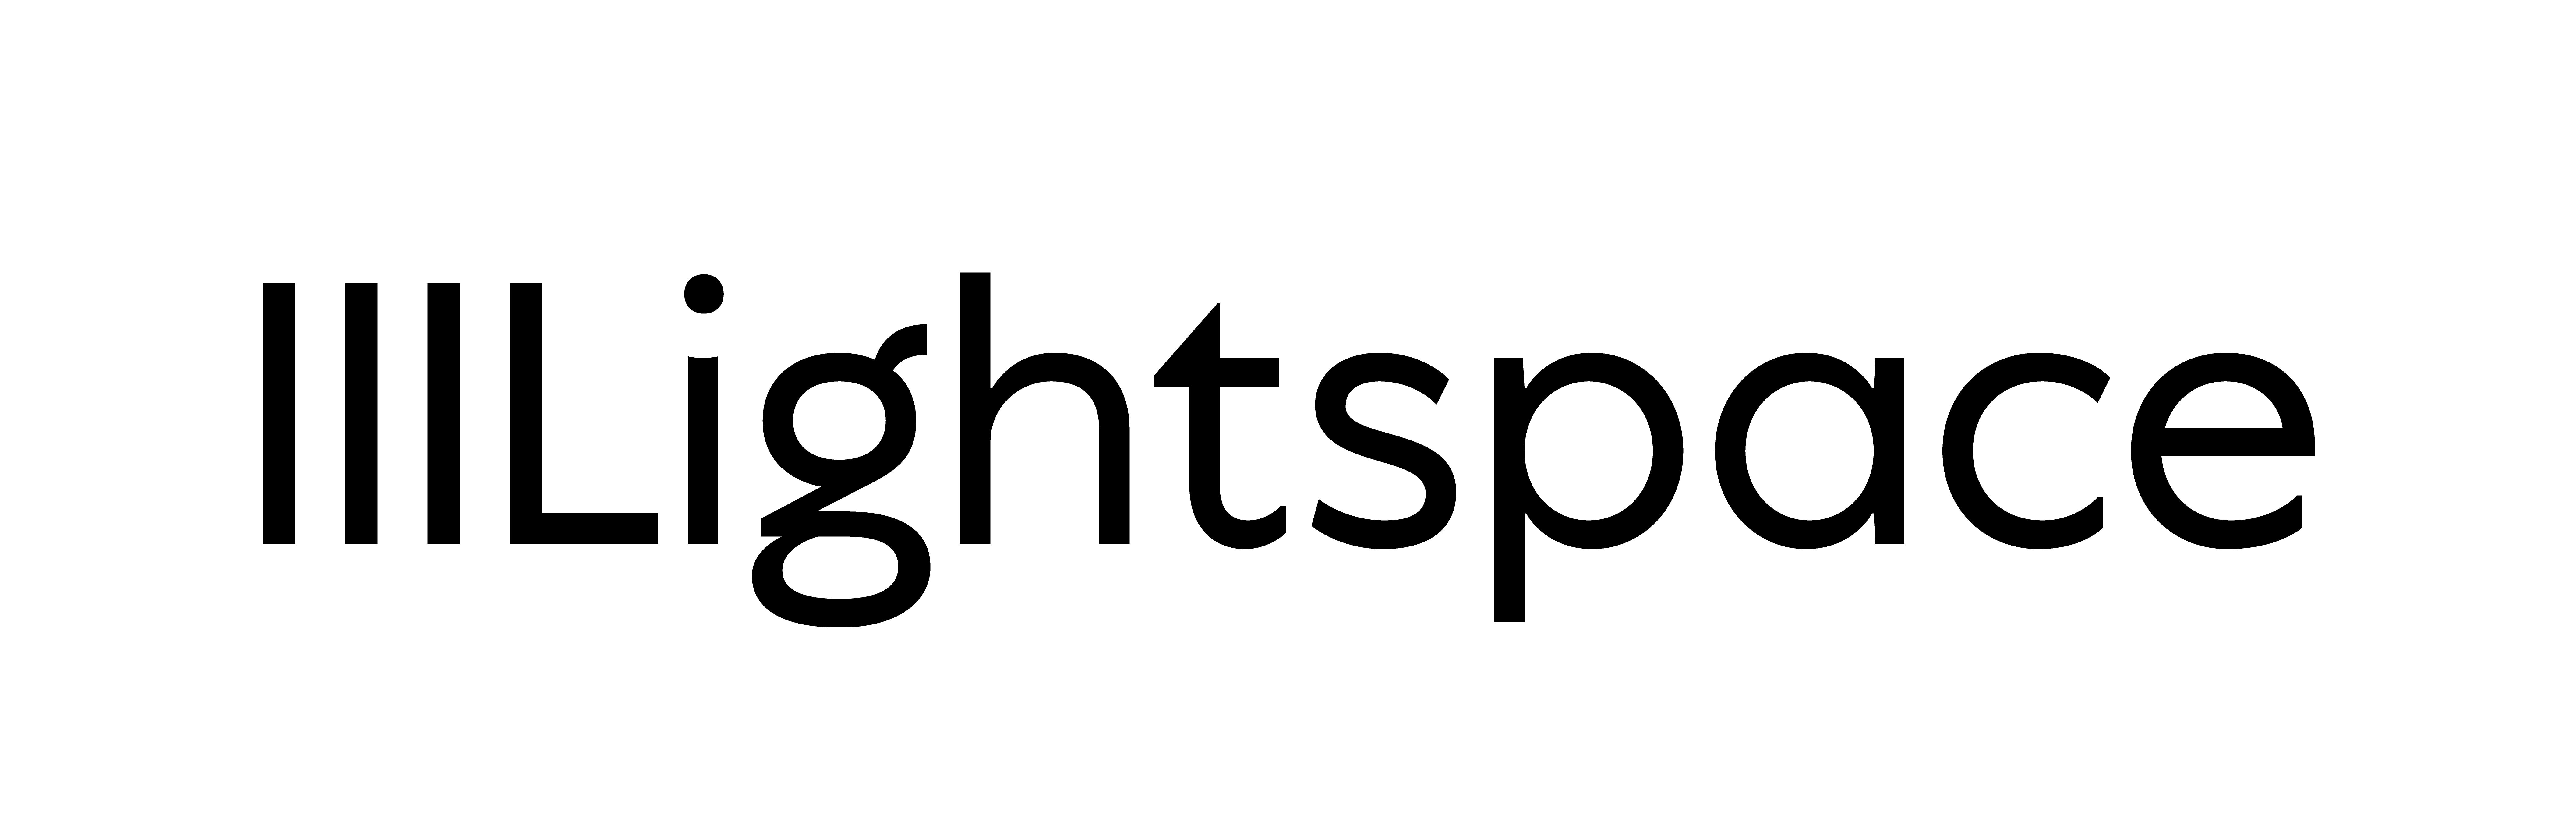 Lightspace's logo